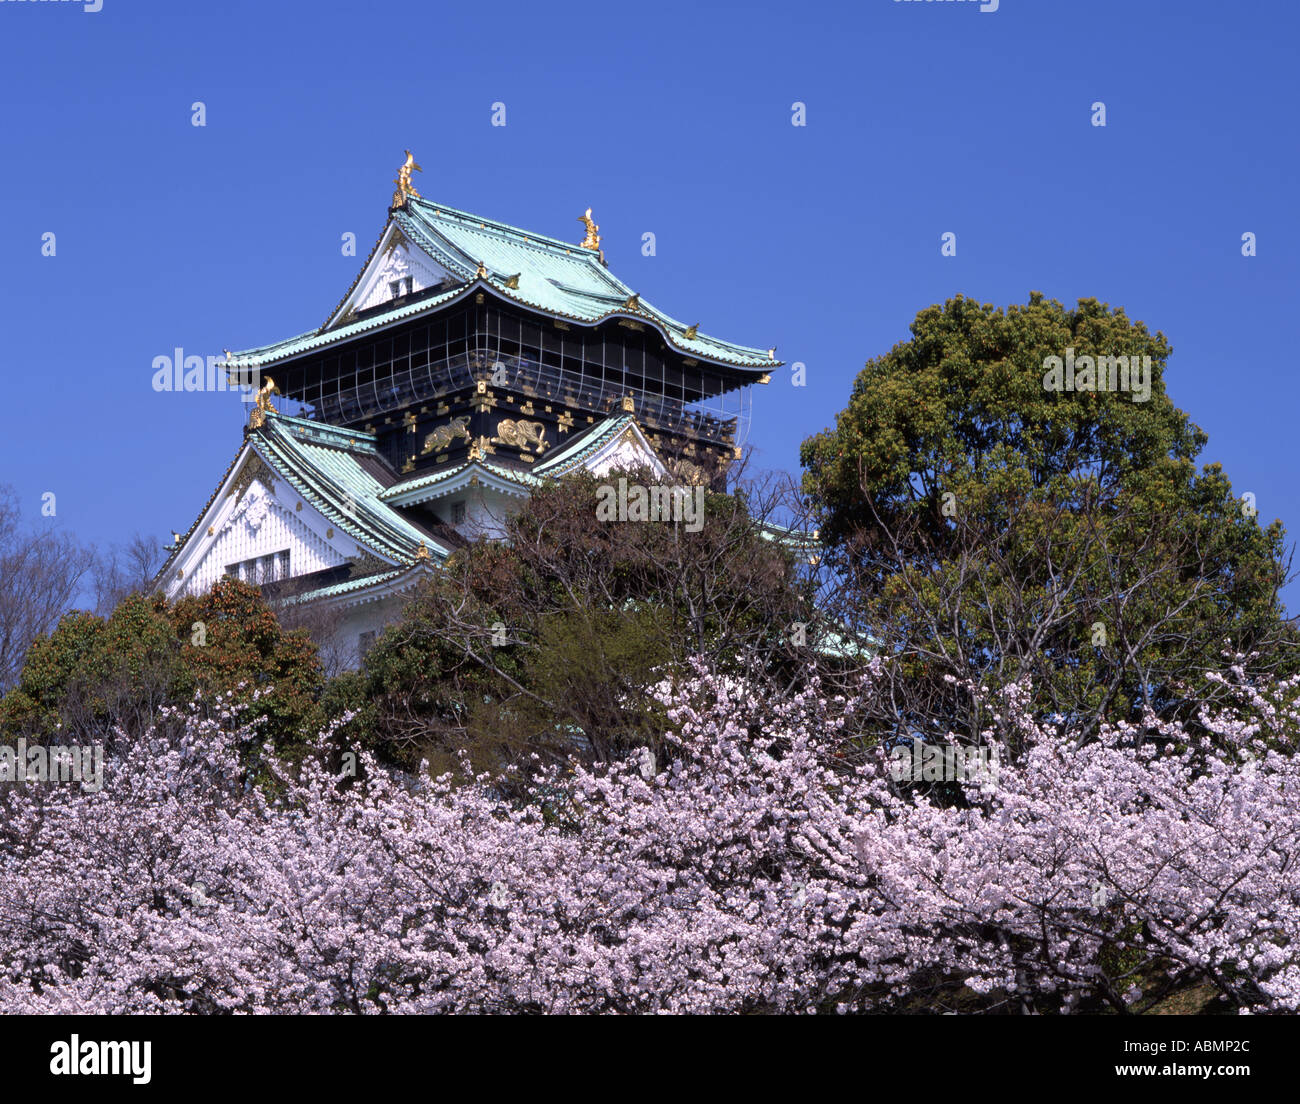 Osaka castle blue skies and cherry blossom Stock Photo